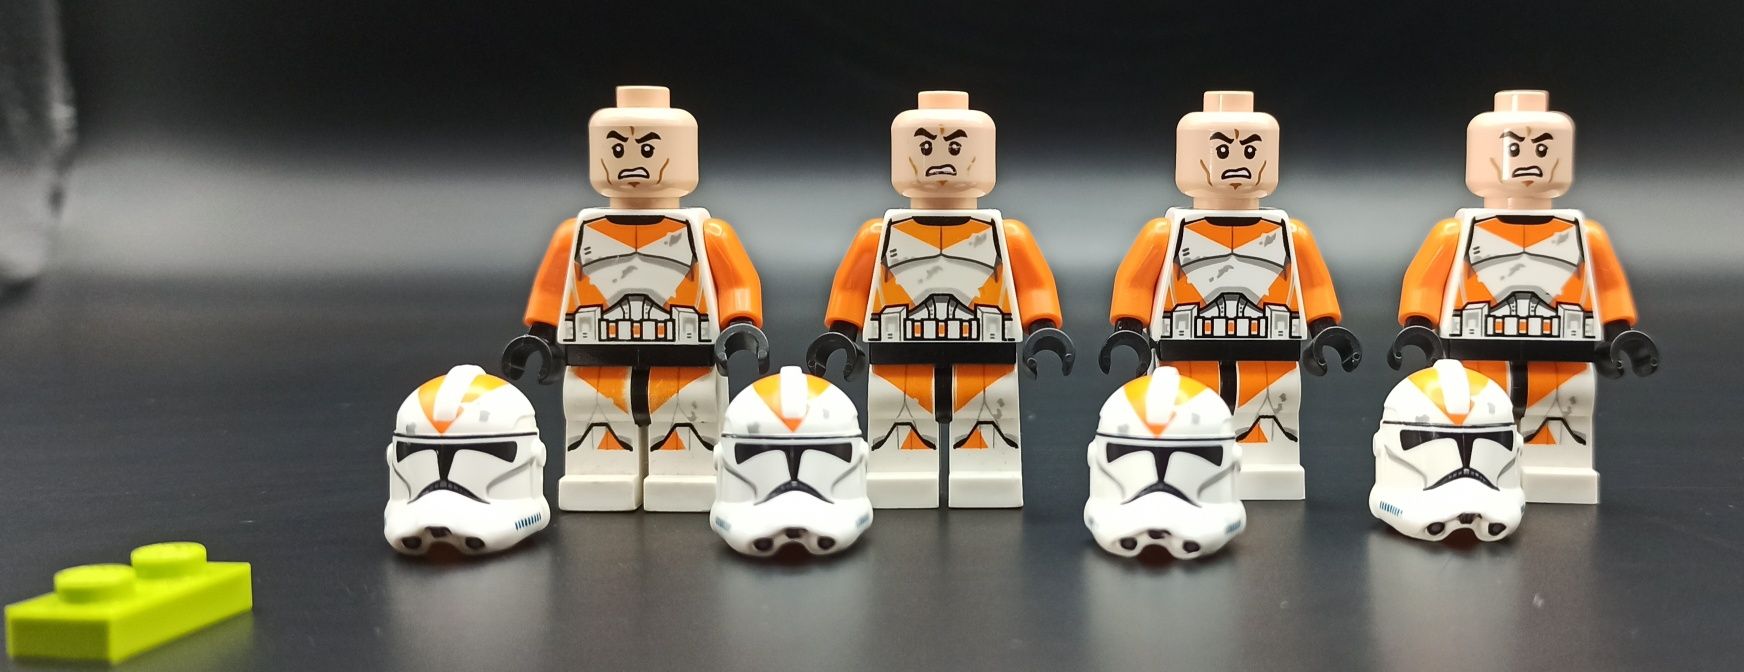 Lego Star wars klon Utapau 212th attack battalion 75036 clone trooper